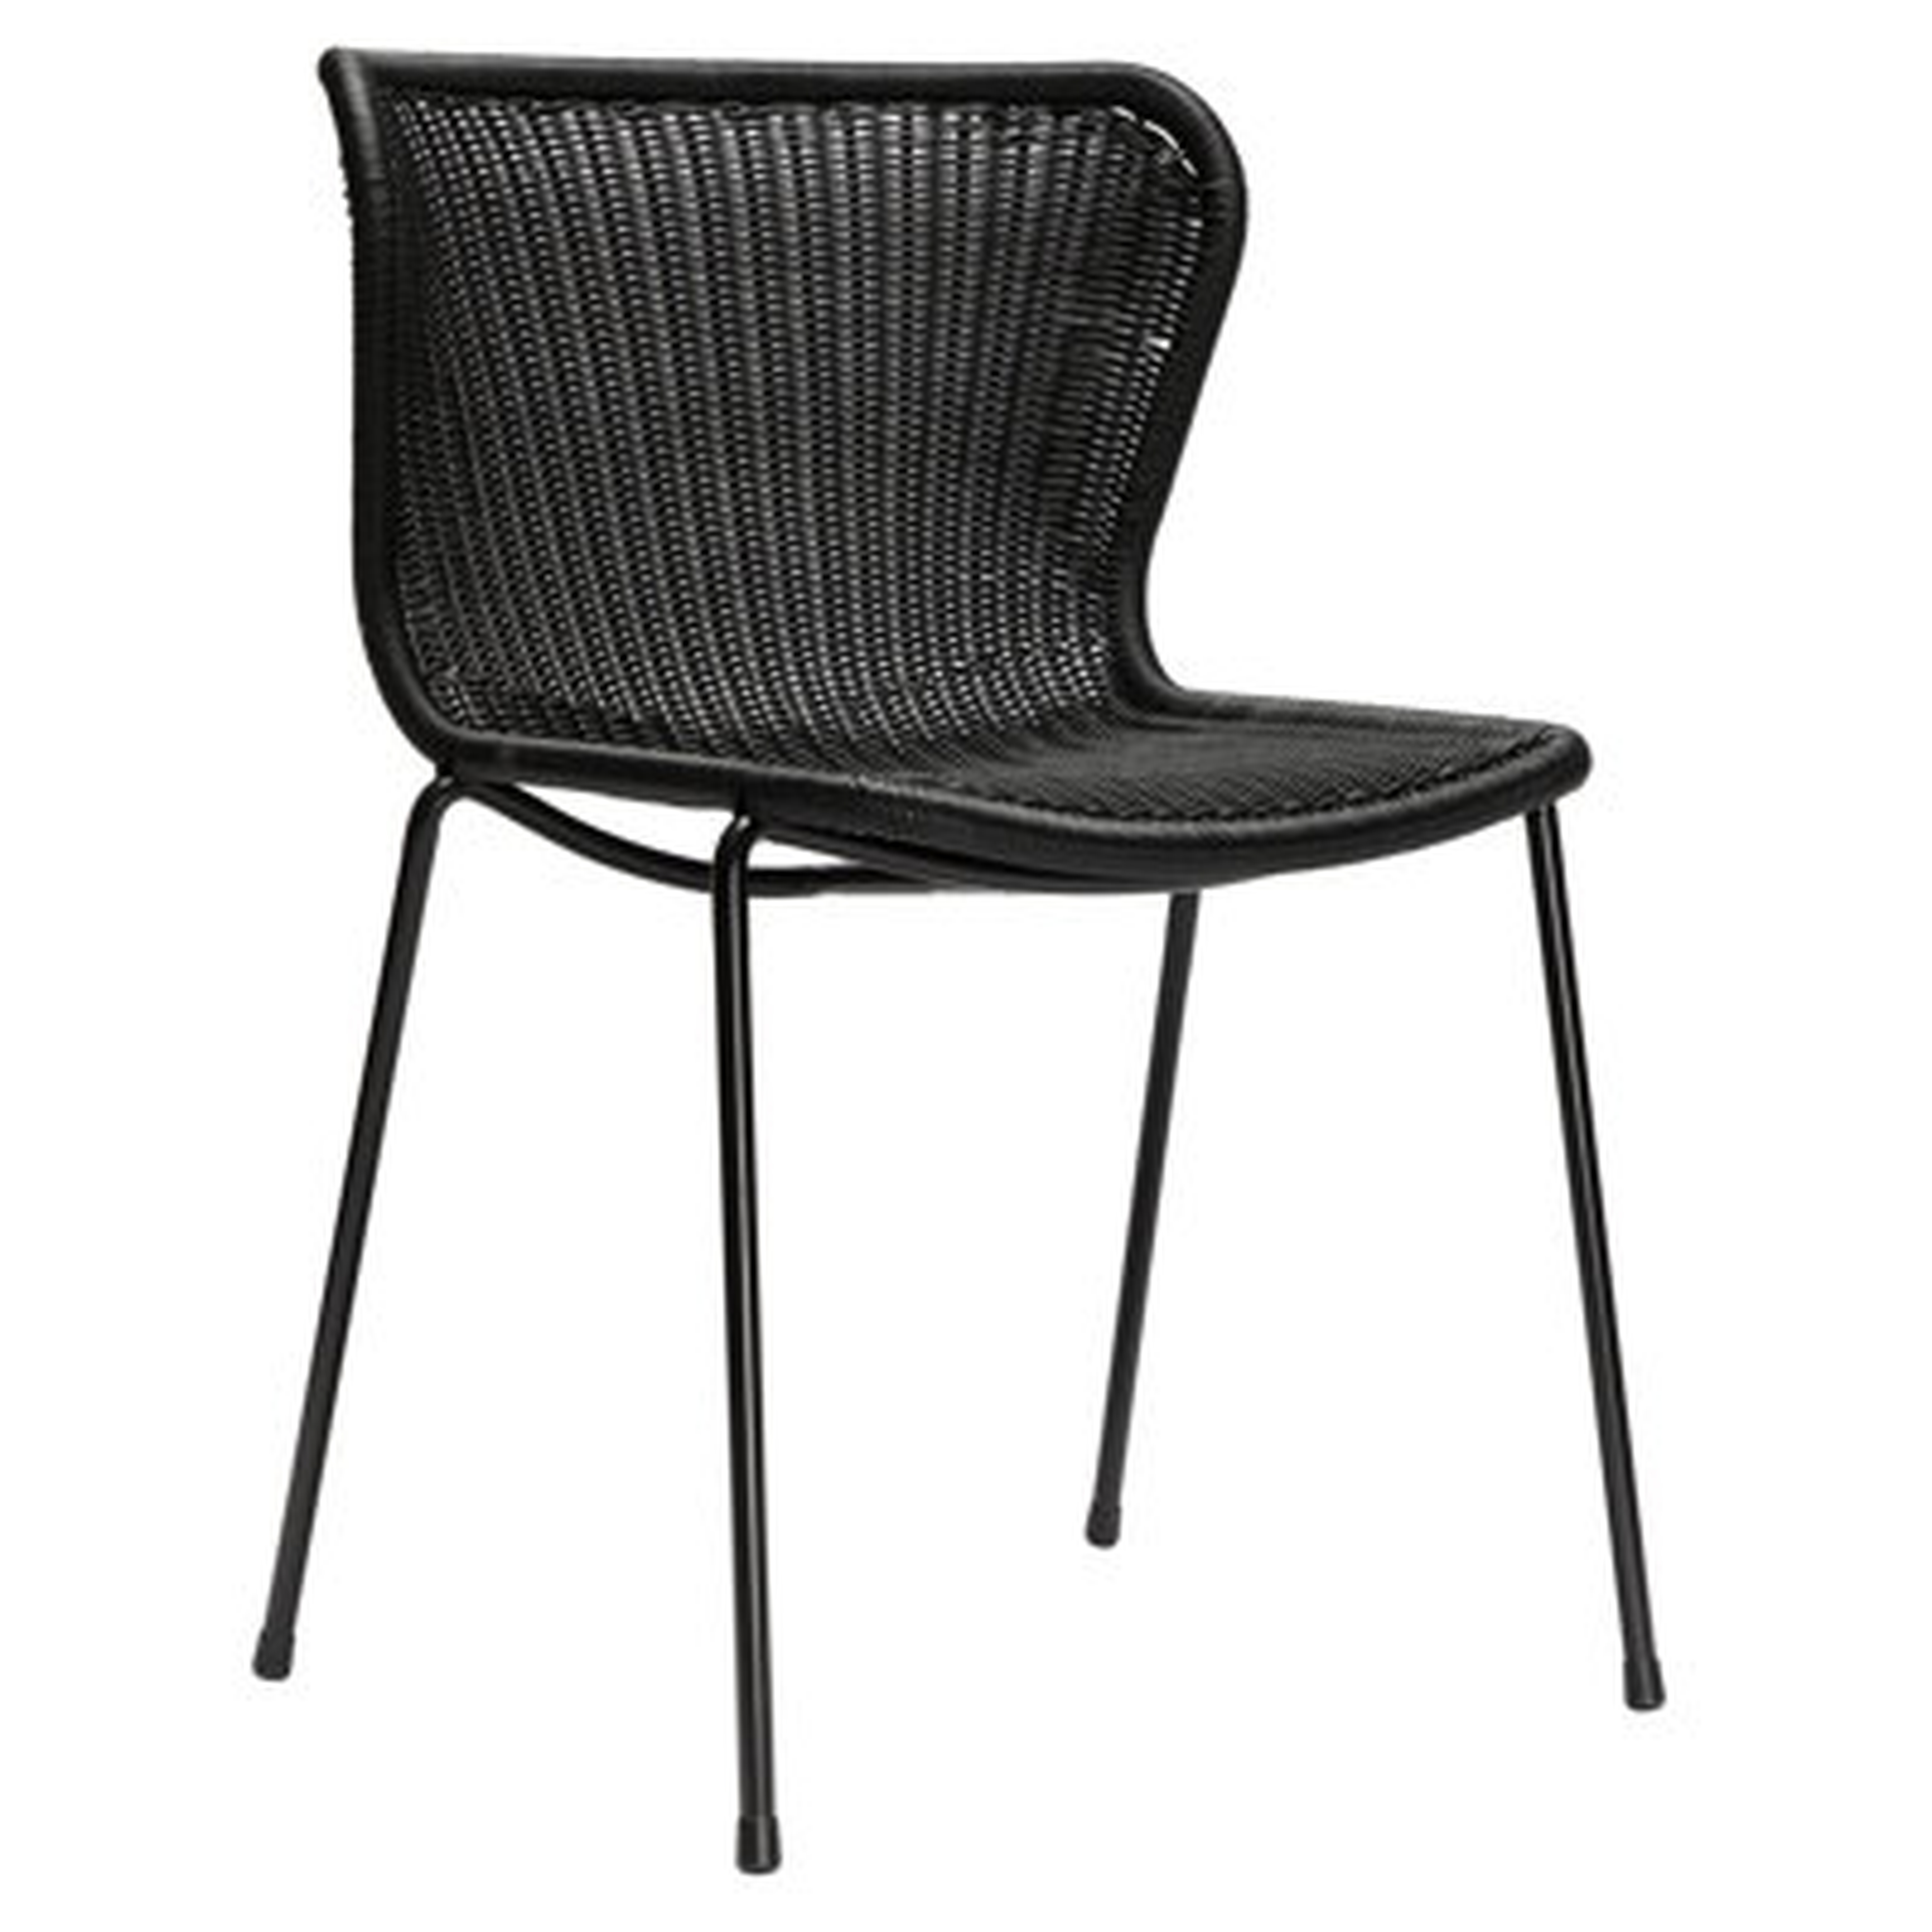 C603 Outdoor Dining Chair - Wayfair